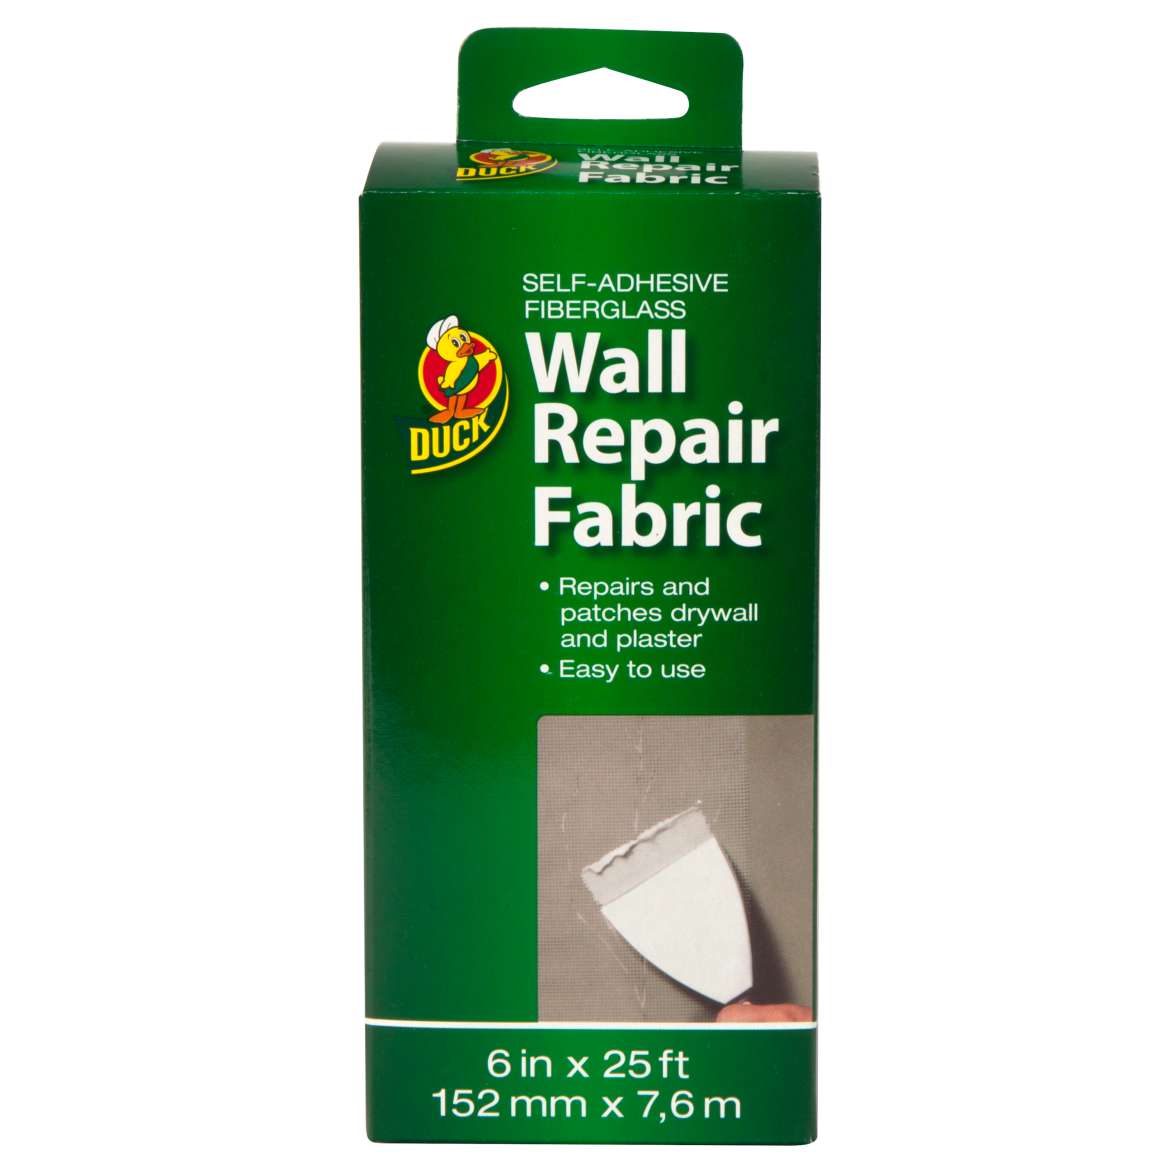 Duck Brand Wall Repair Fabric [Self-Adhesive Fiberglass]